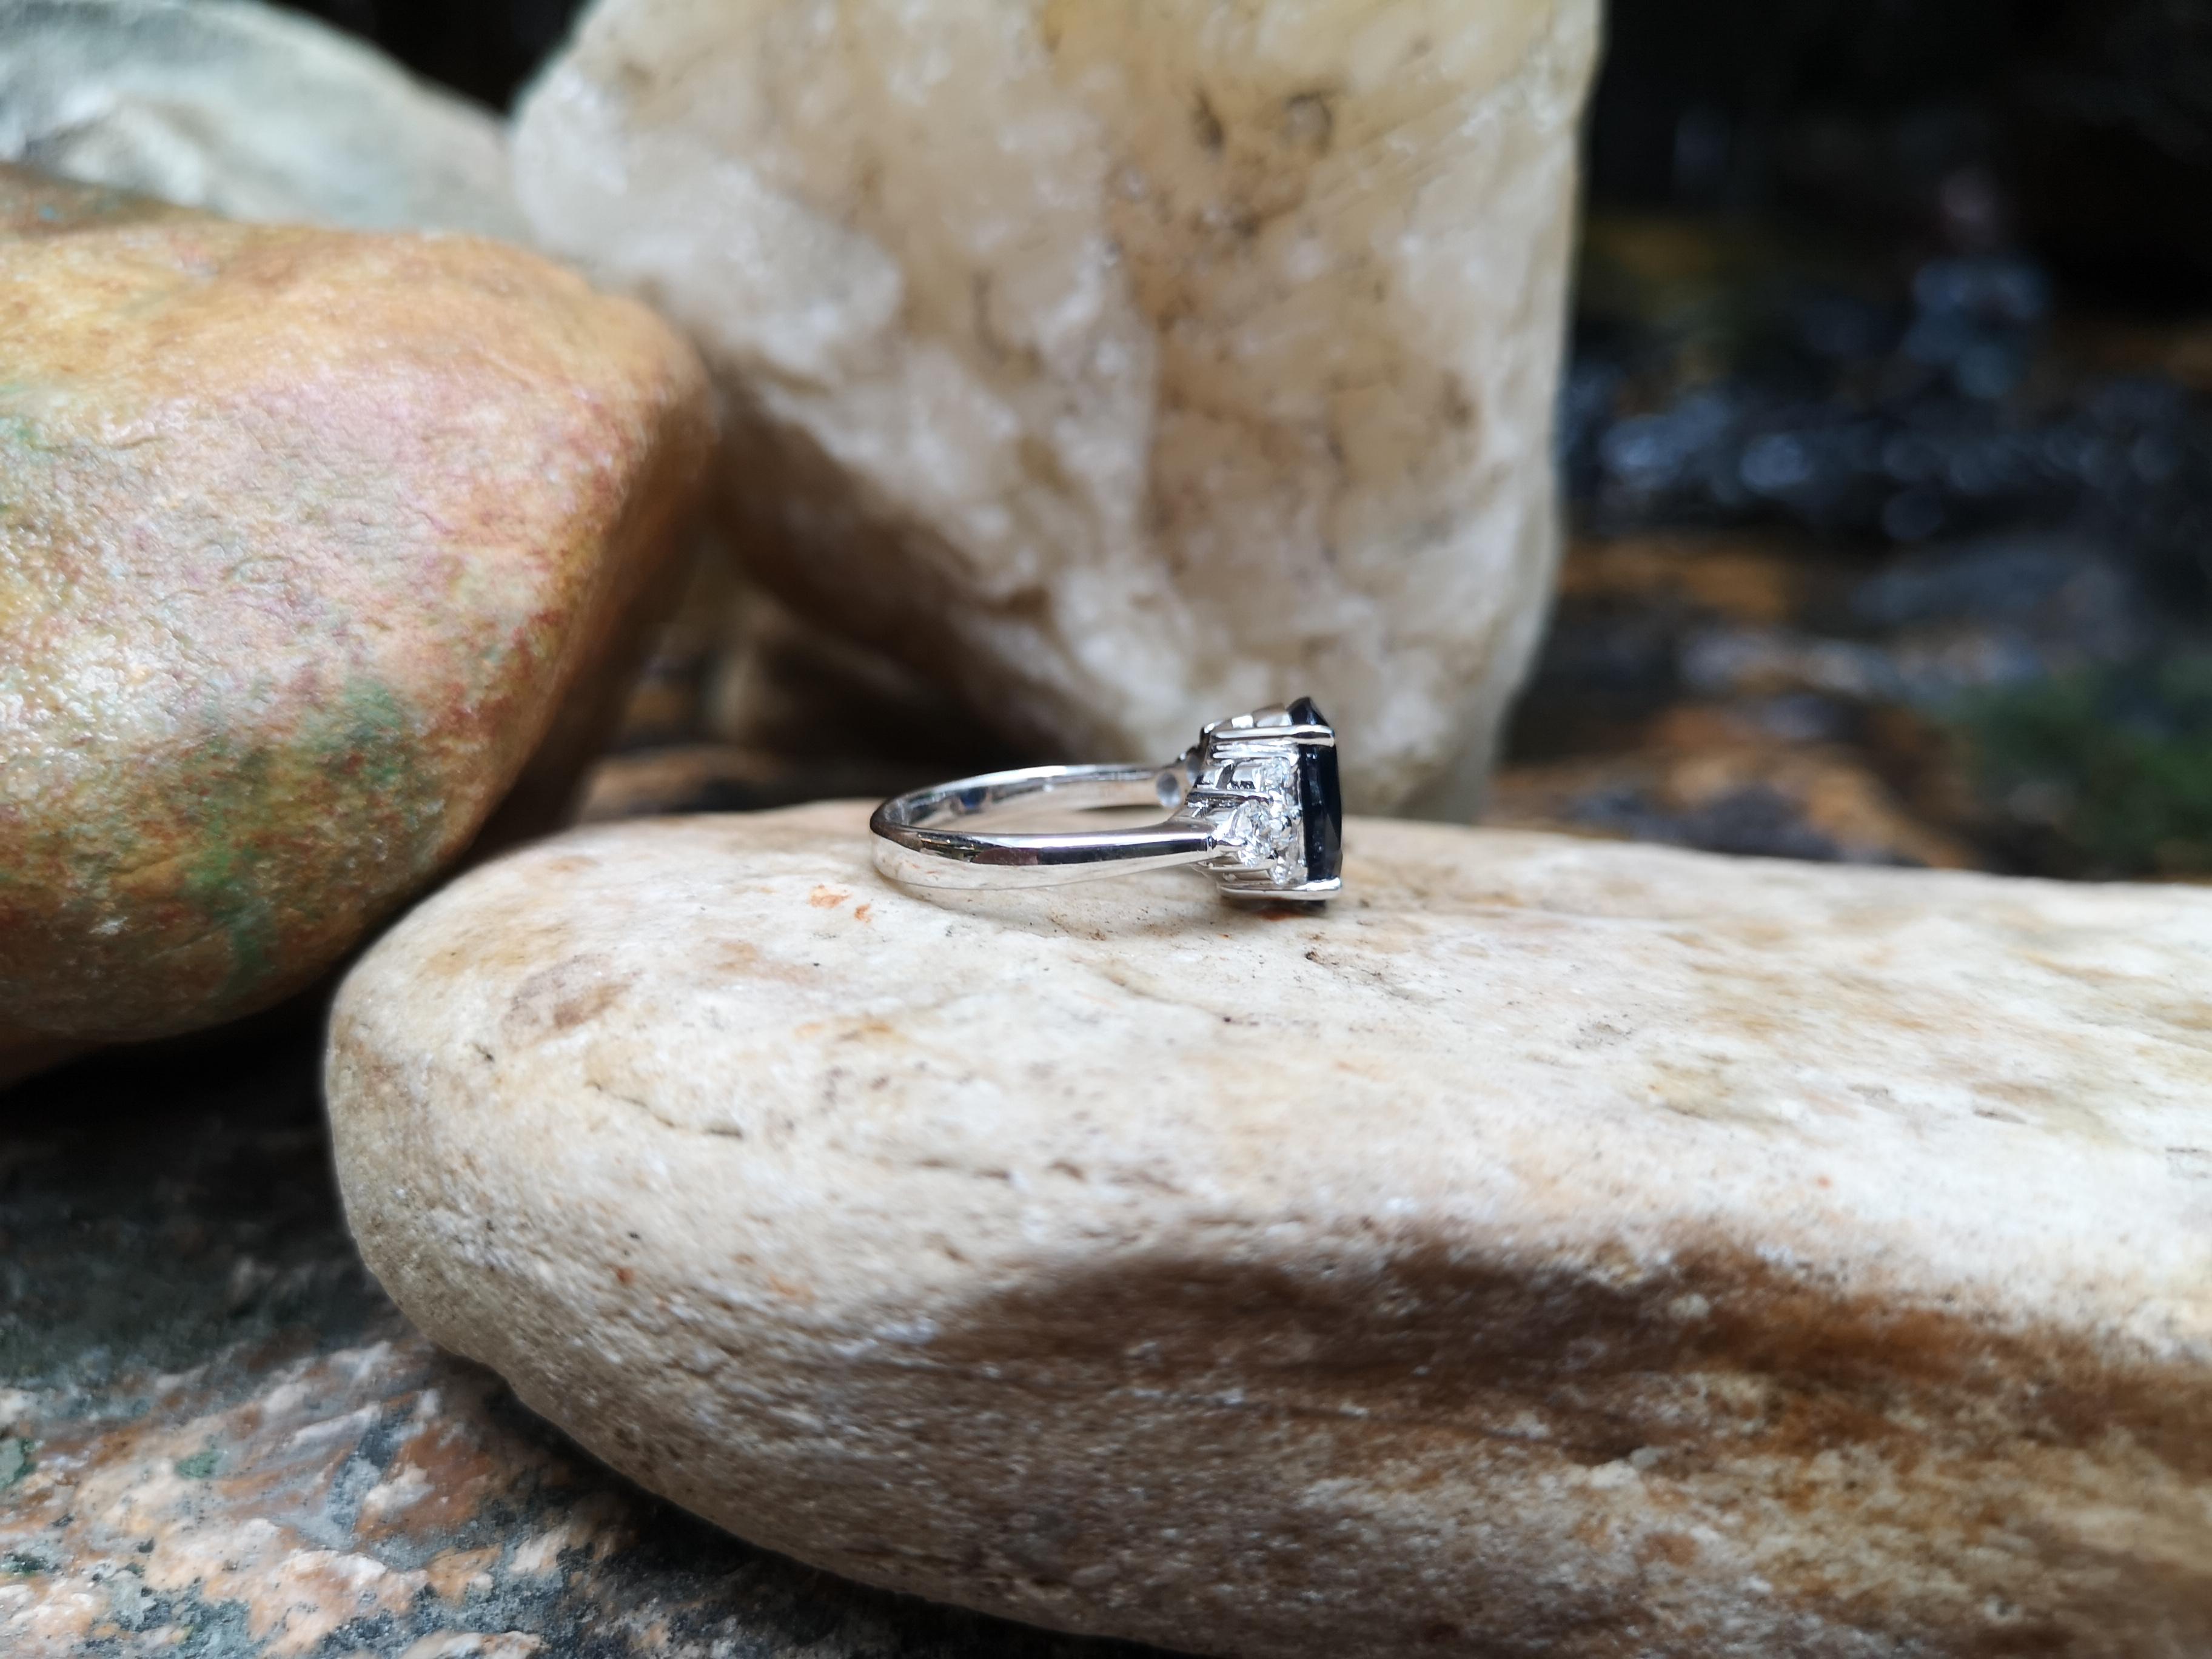 4 carat blue sapphire ring